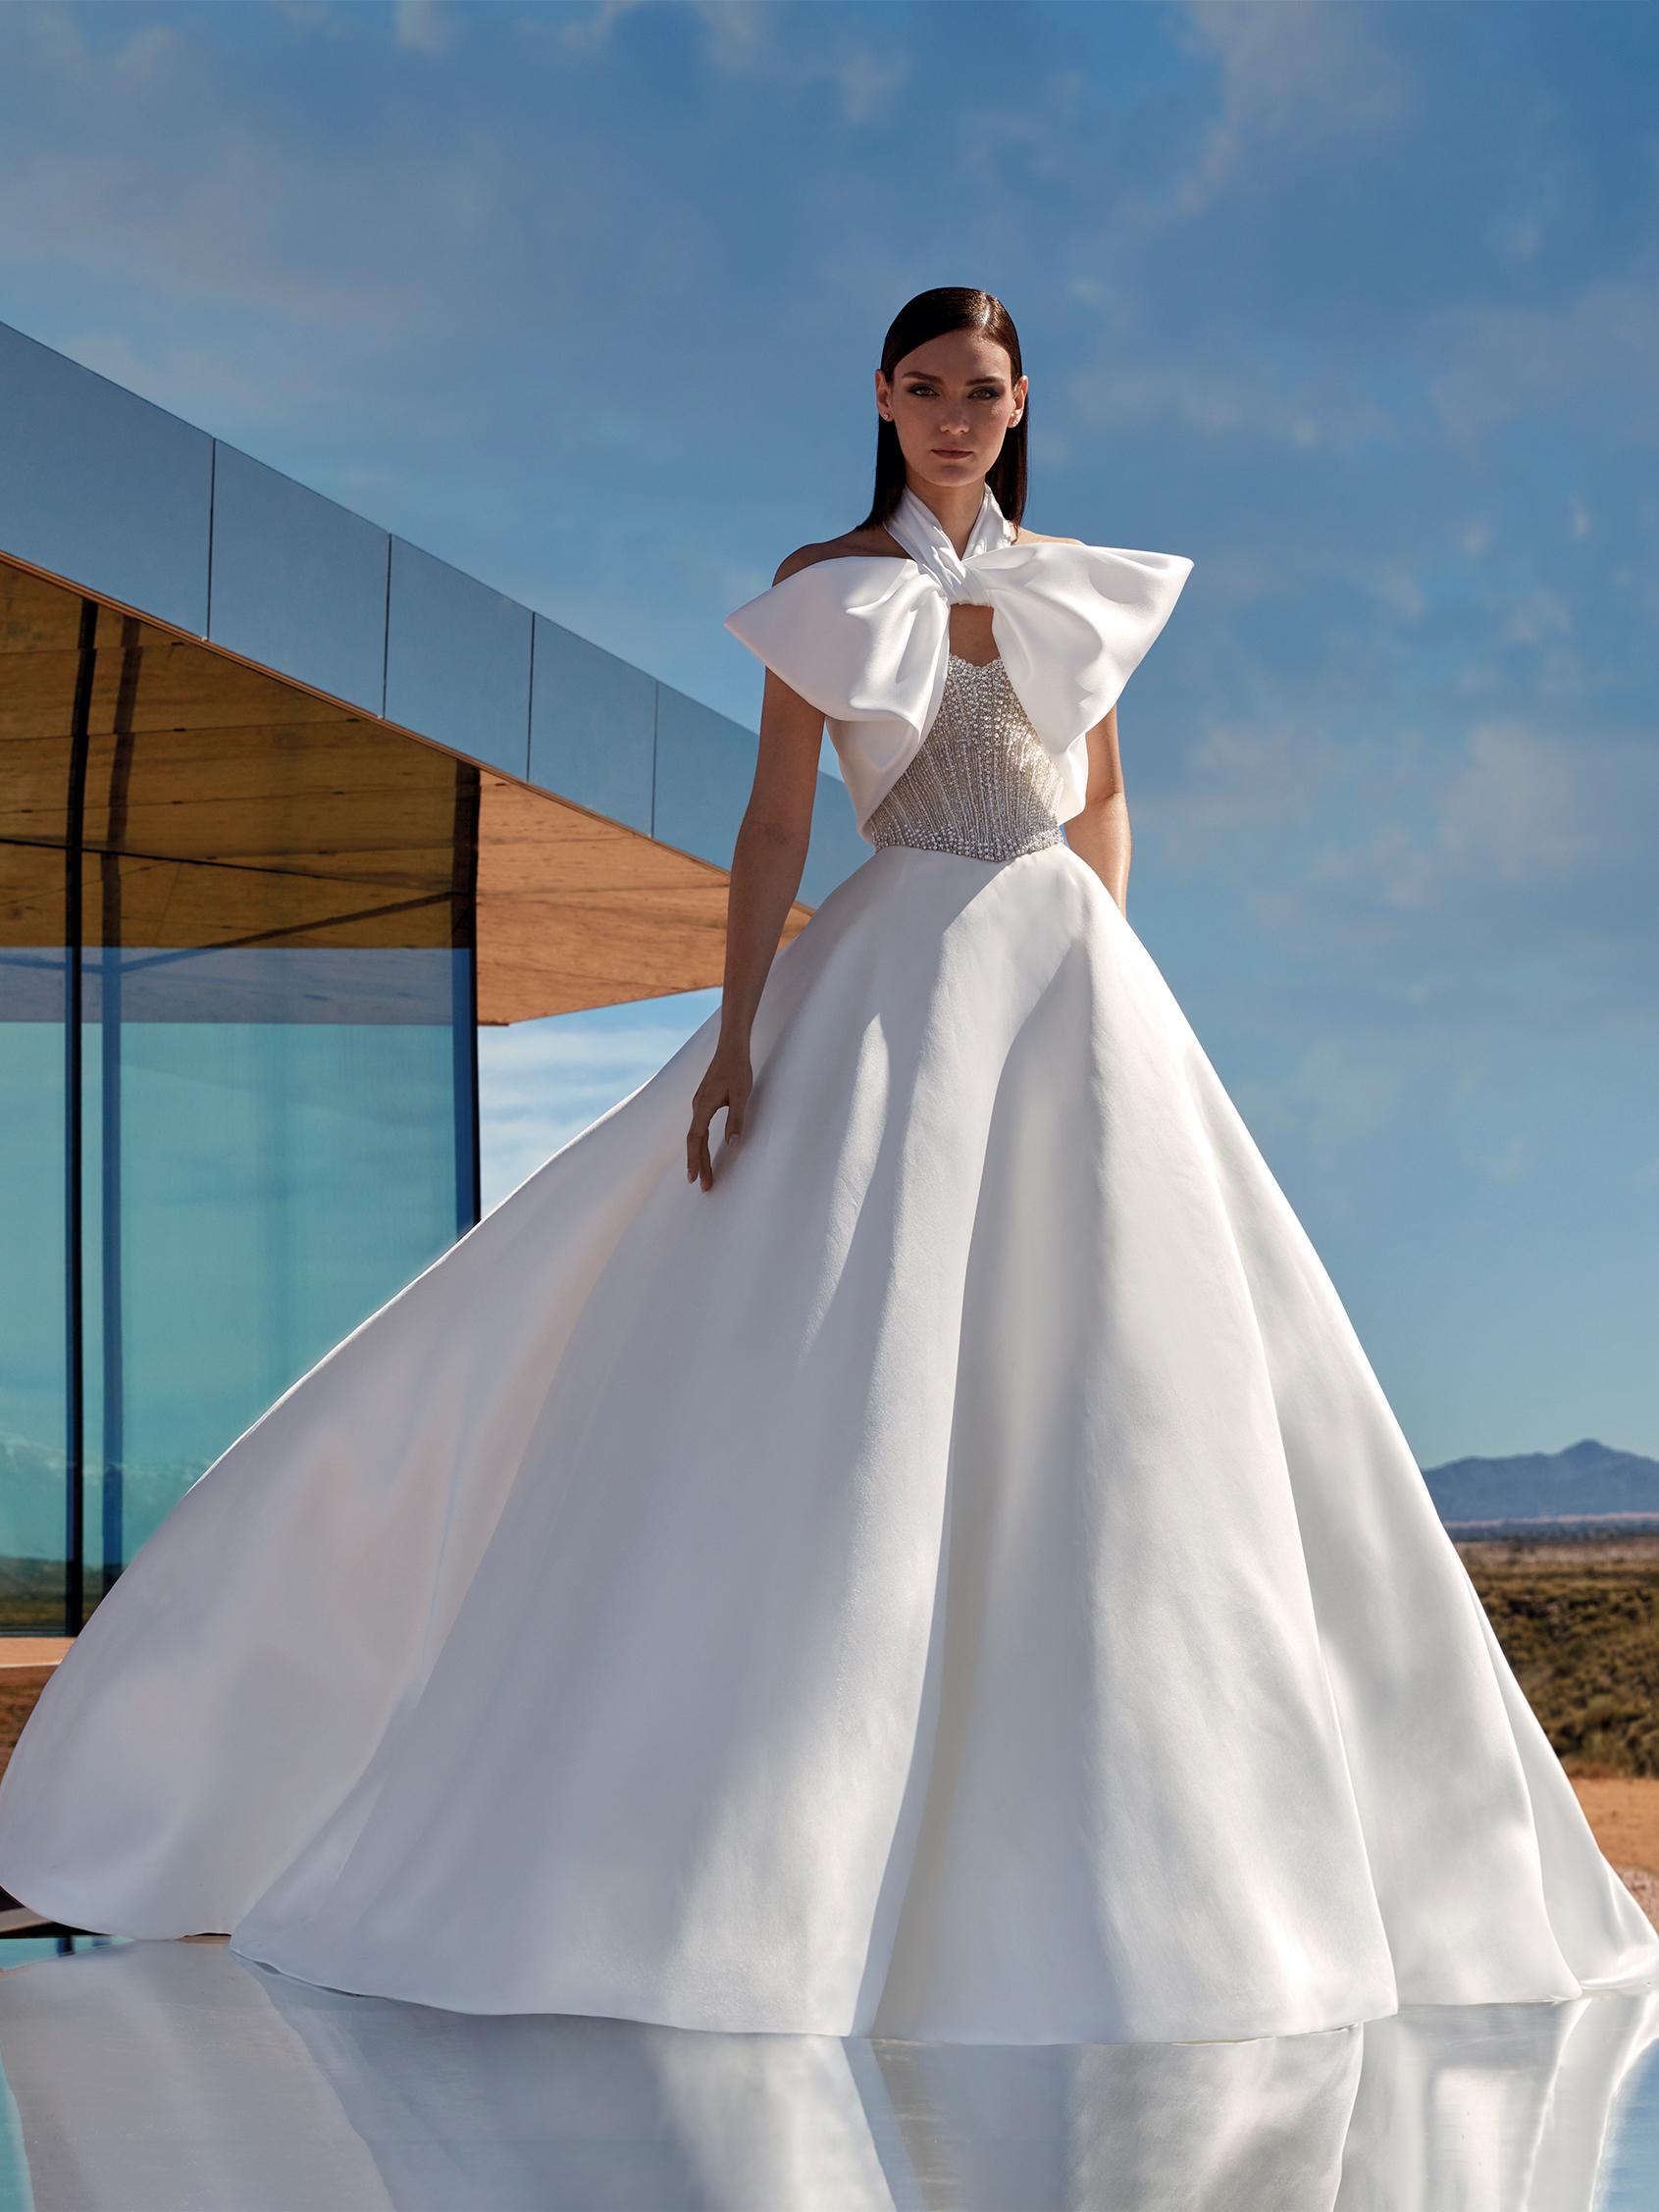 Maruta Princess/Ball Gown make to order wedding dress Milk |  Devotiondresses.com